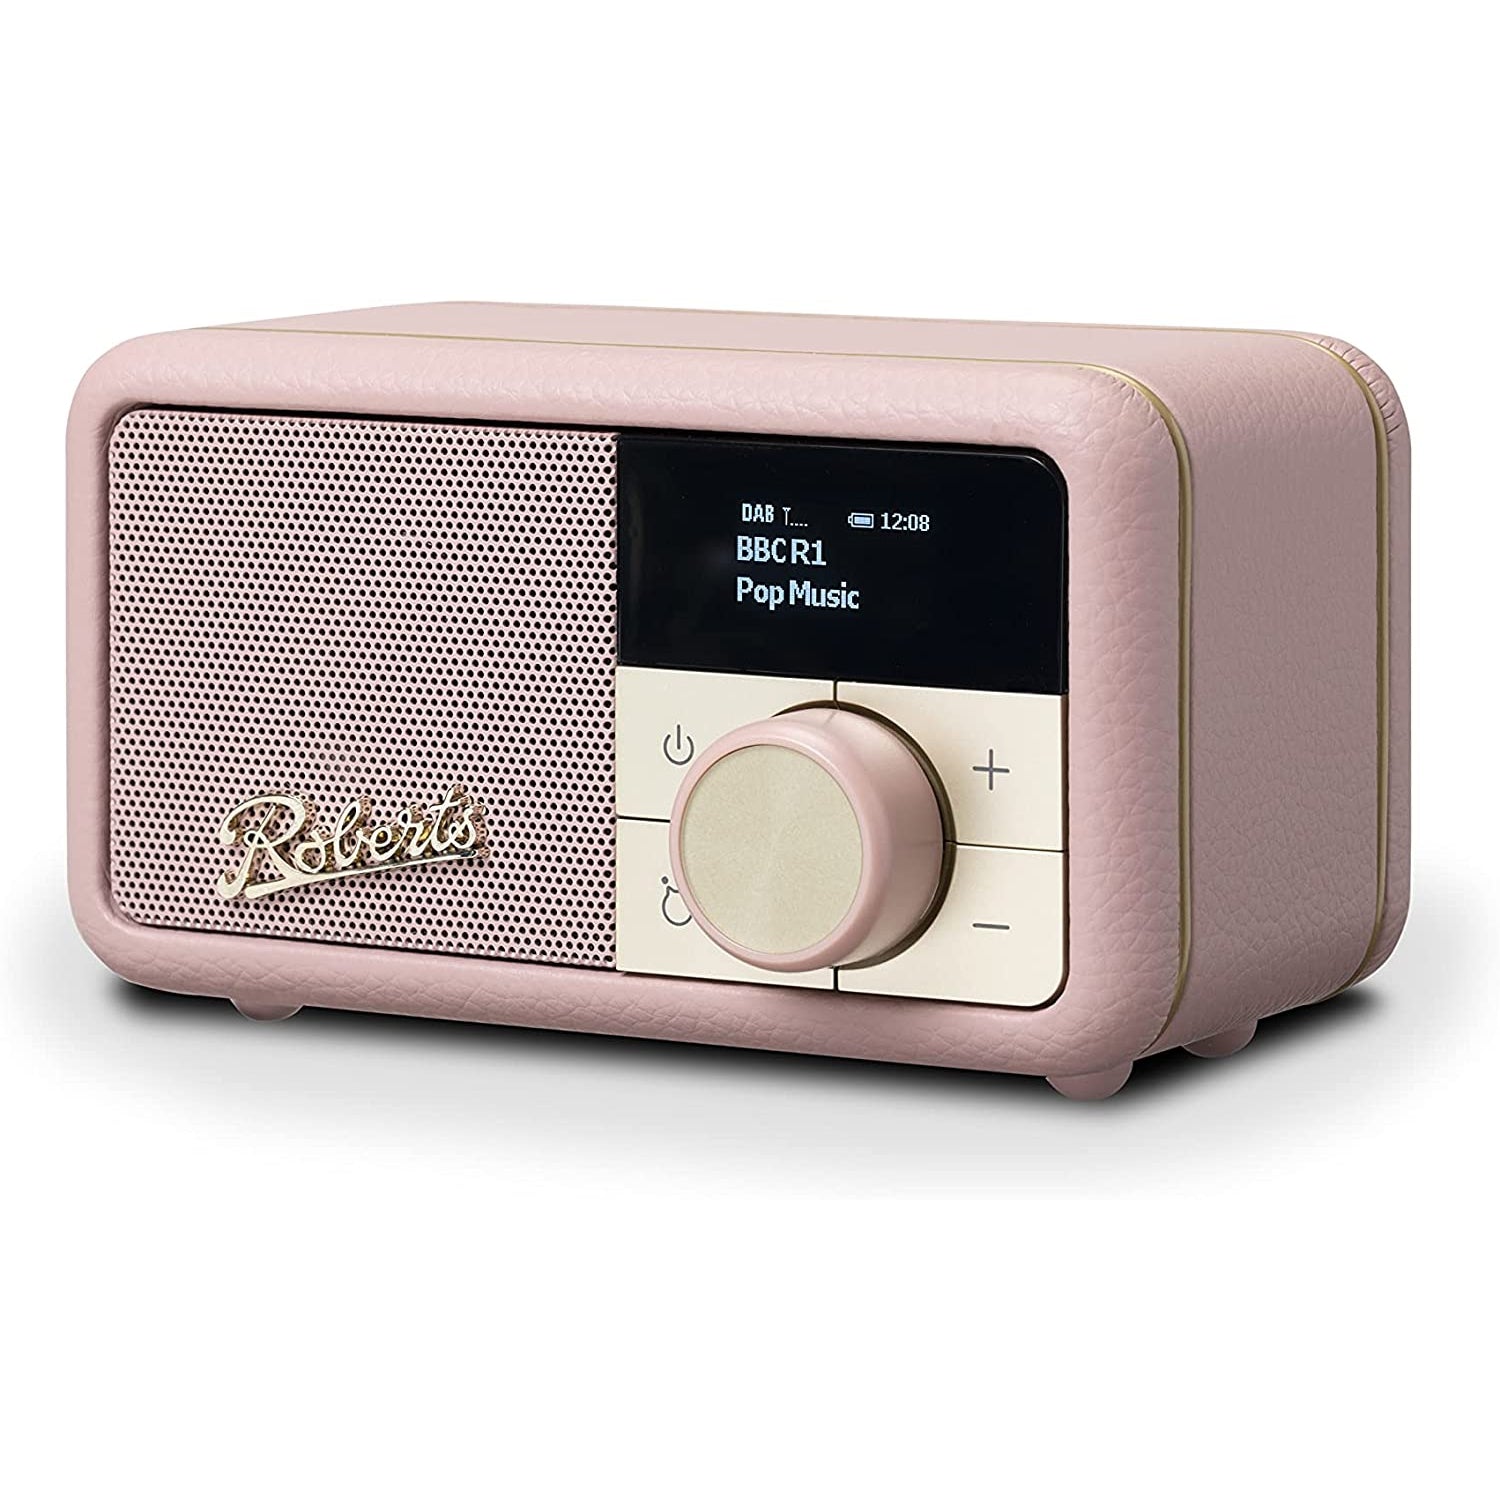 Roberts Revival Petite Digital Radio - Dusky Pink - Refurbished Good